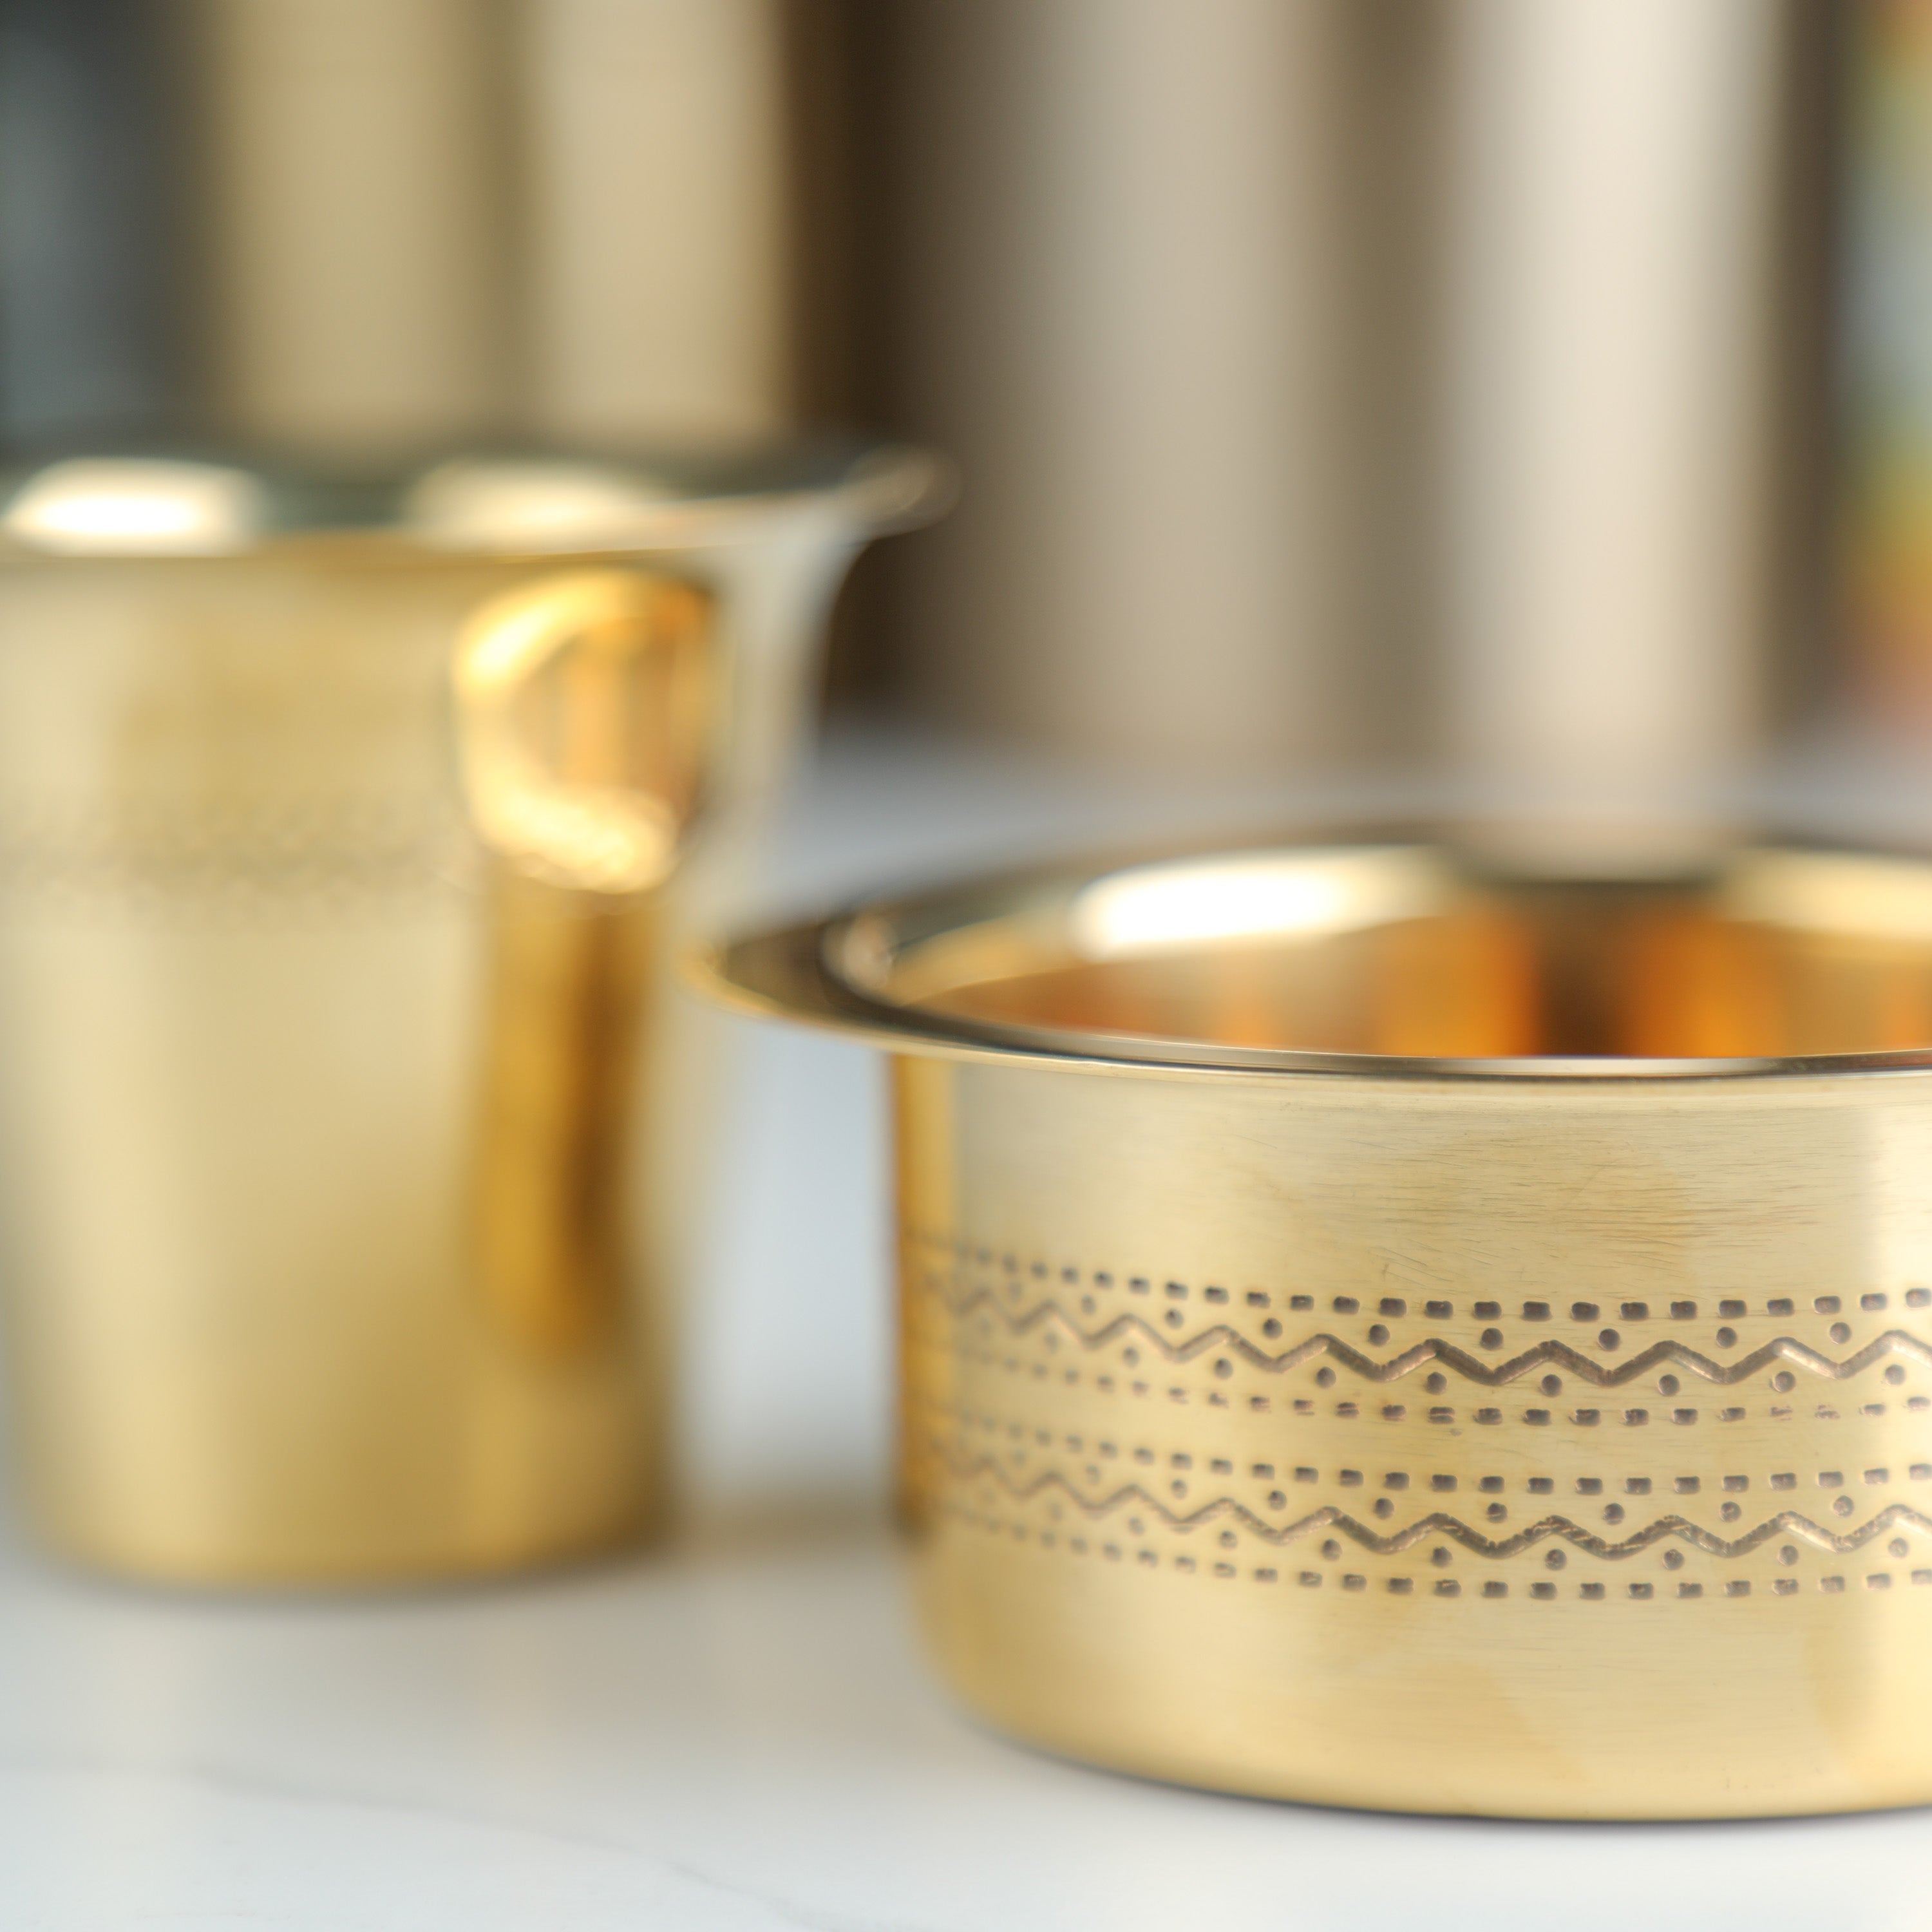 Traditional Brass Davara Tumbler Set/South Indian Coffee Glass Tumbler Set  of Two/Brass Dabara Tumbler Set